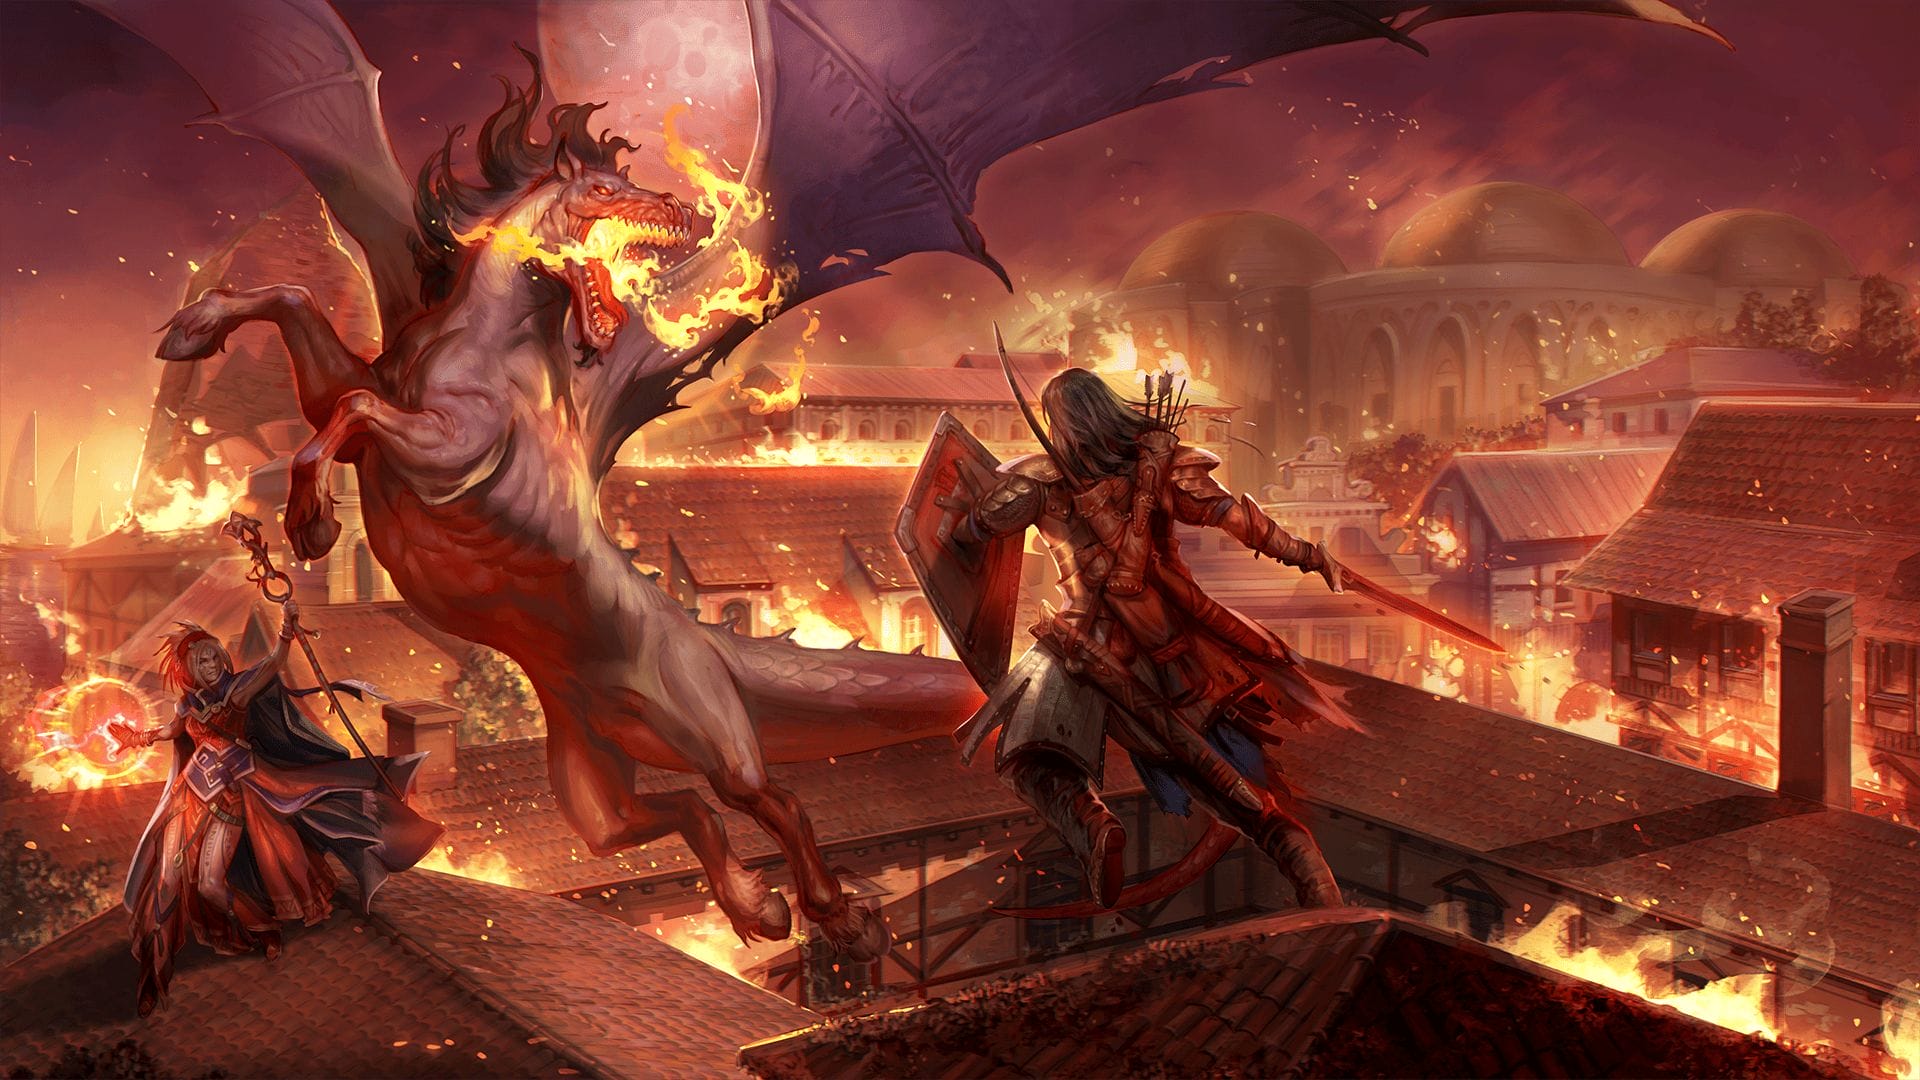 Magical fire fight versus horse demon